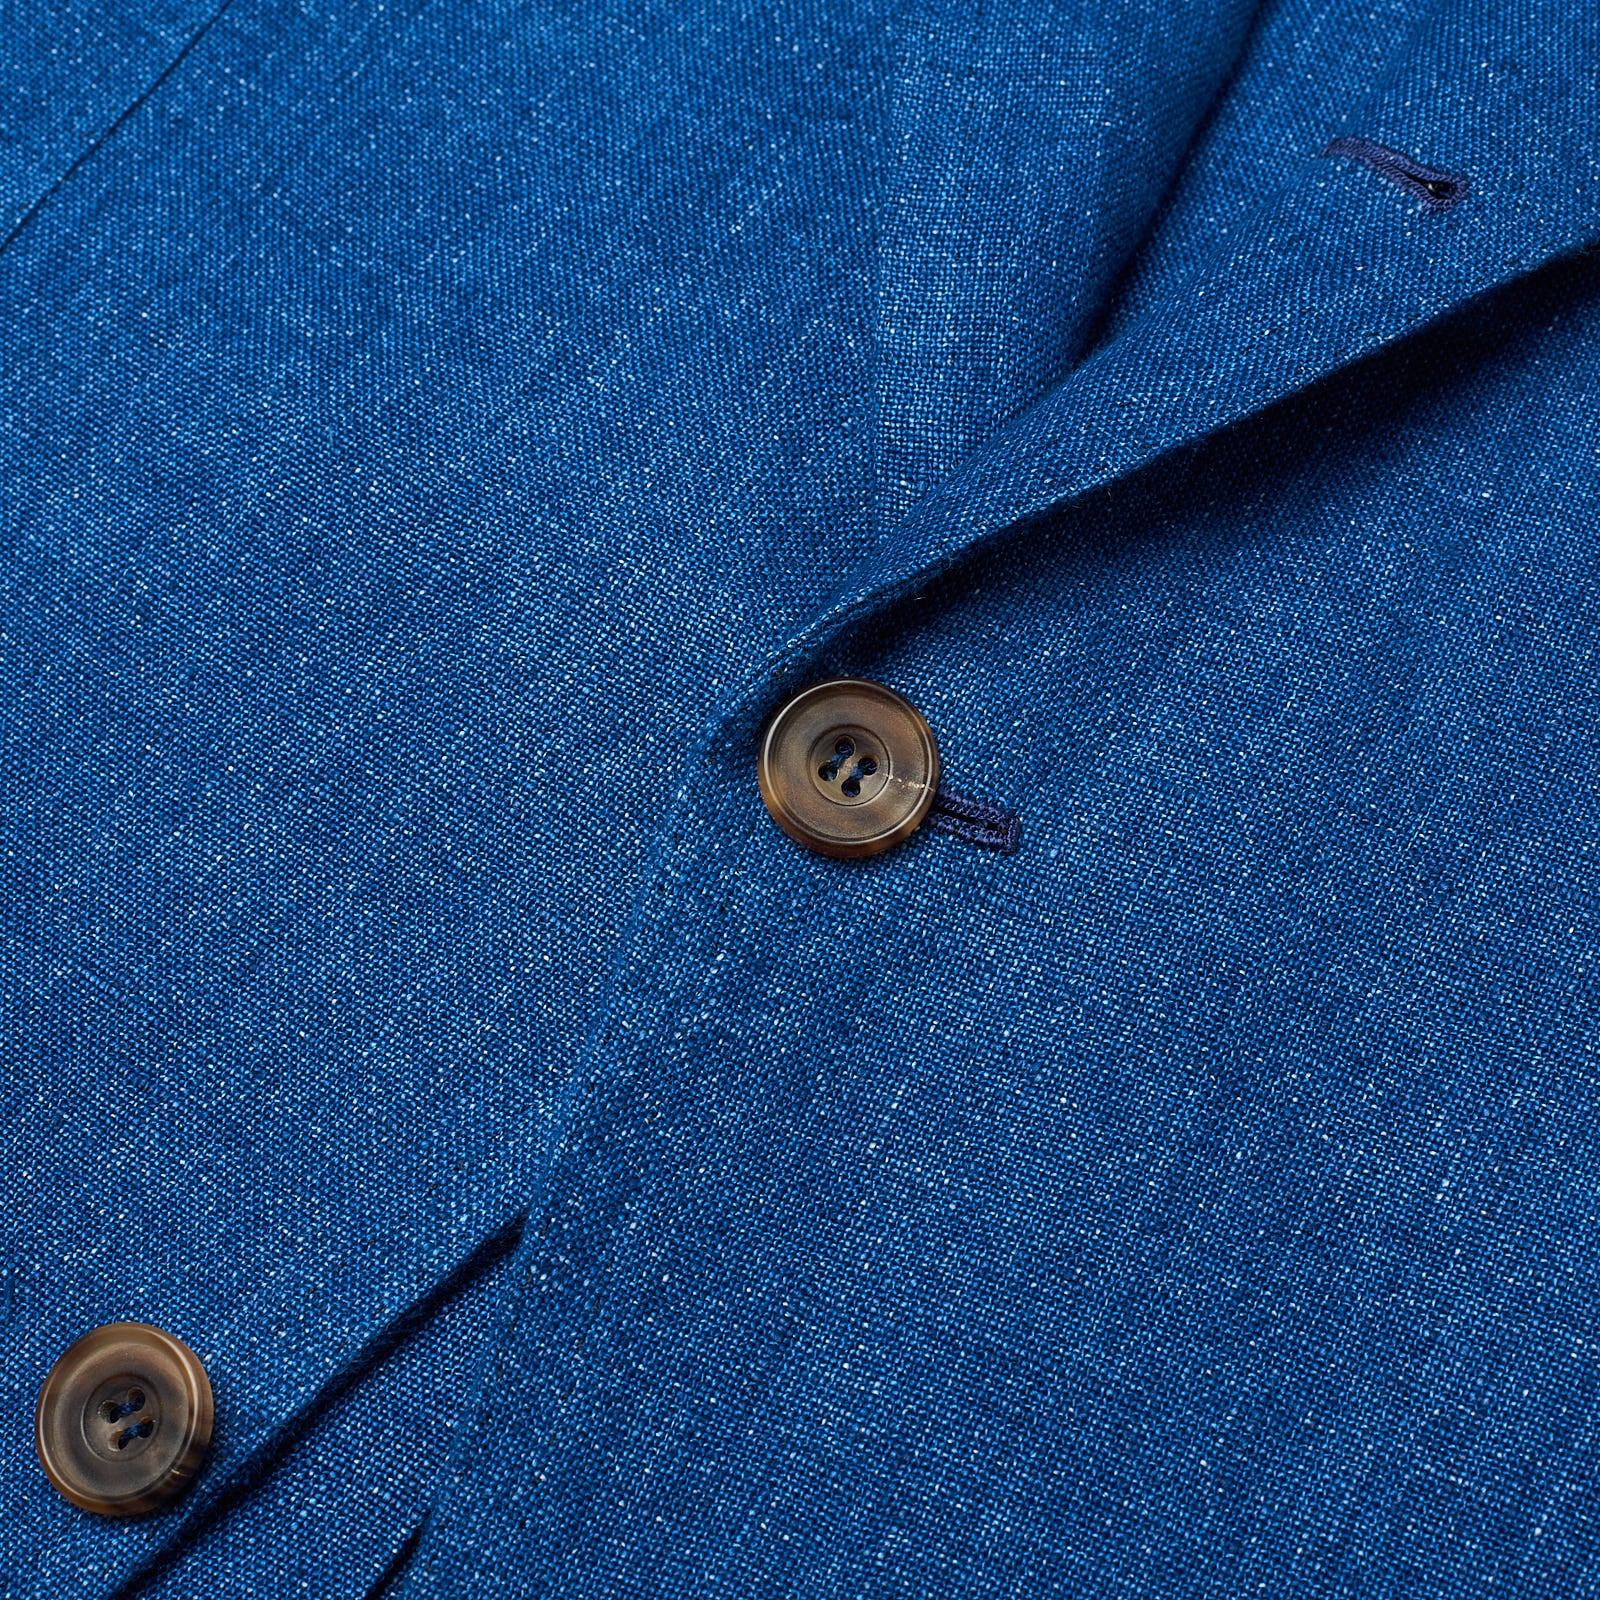 RUBINACCI LH Handmade Bespoke Blue Linen-Cotton Hopsack Jacket EU 50 NEW US 40 Slim RUBINACCI